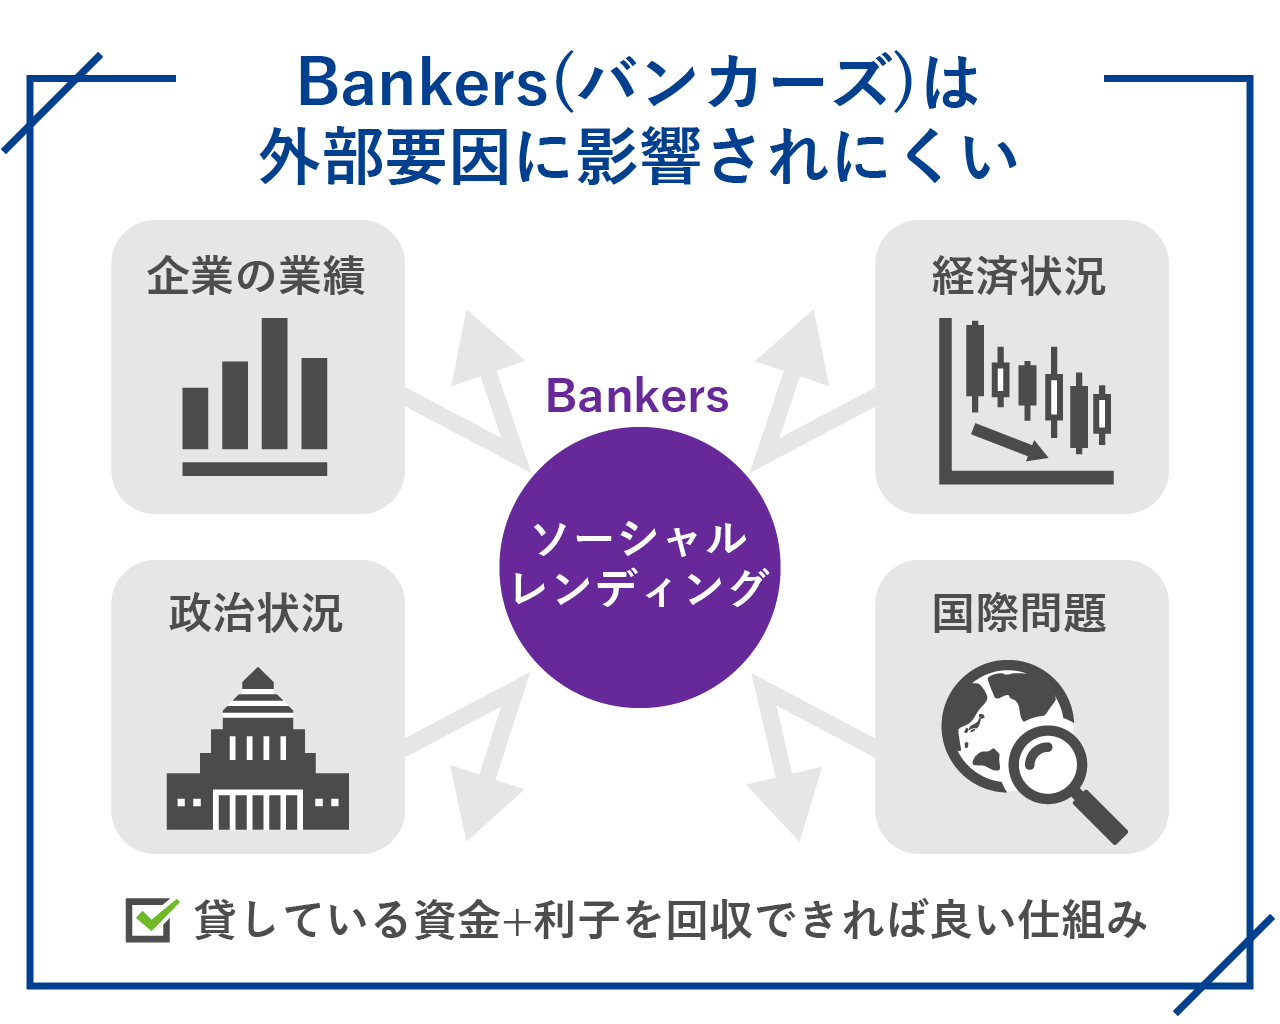 Bankers(バンカーズ)のソーシャルレンディングは外部要因に影響されにくい